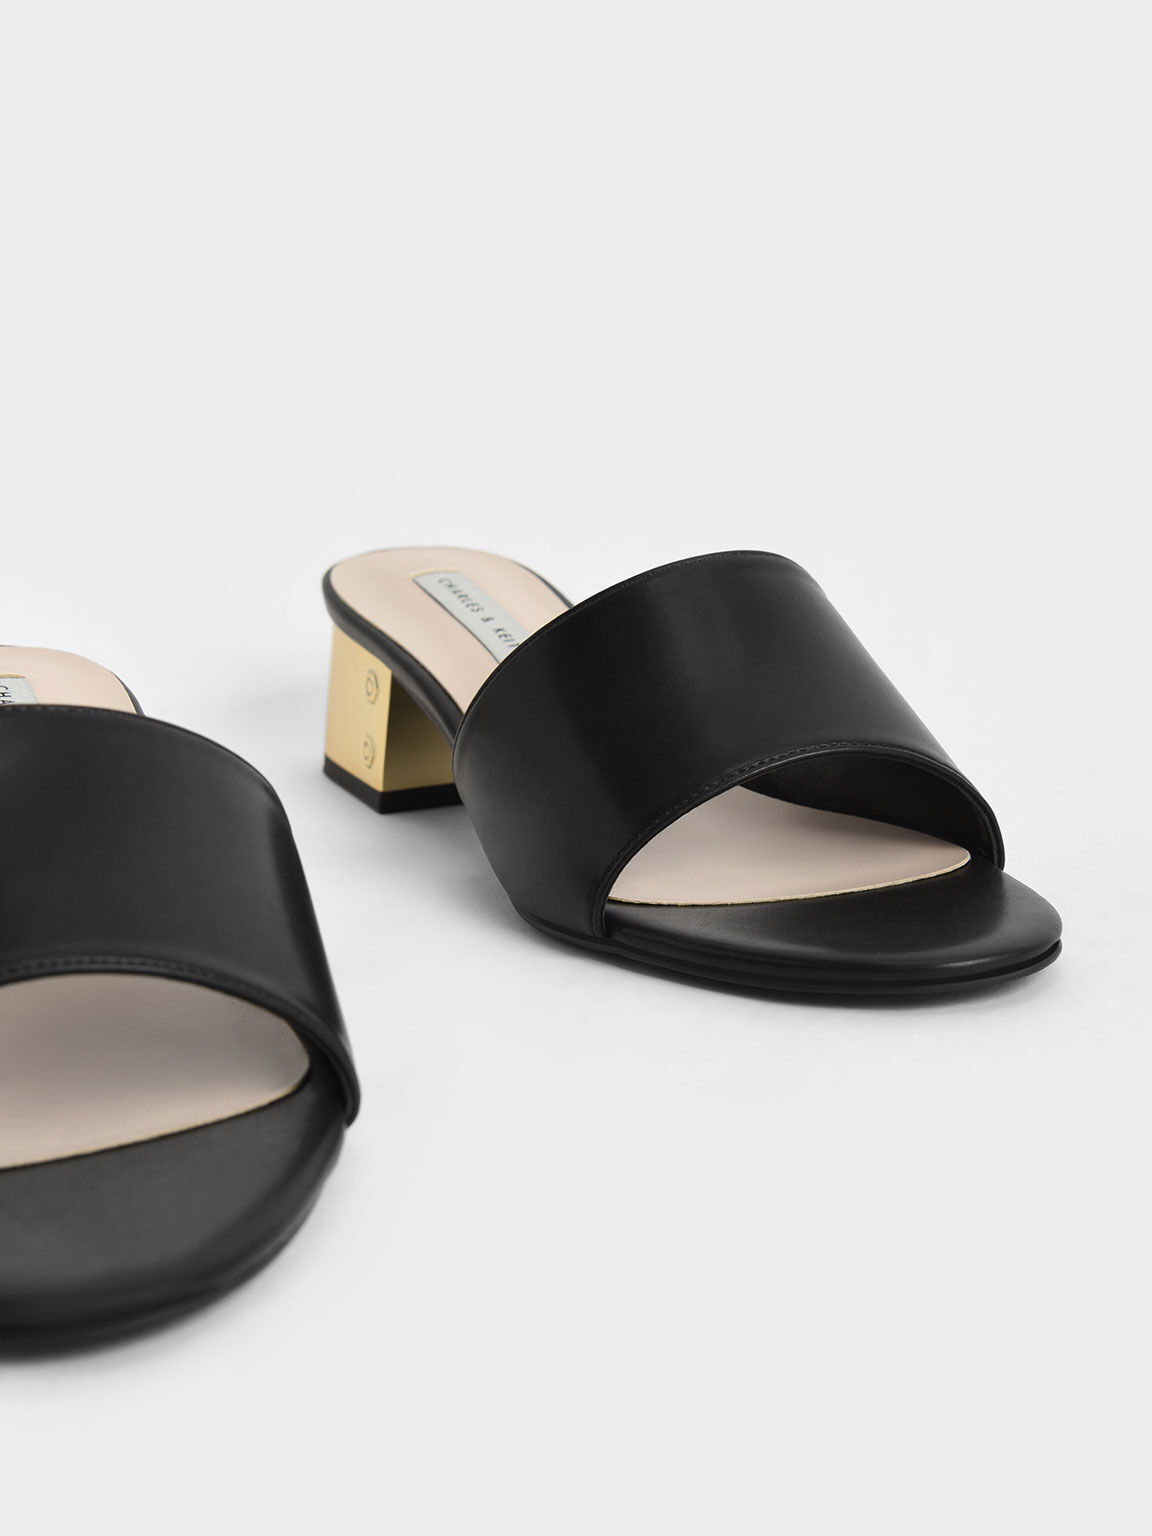 Sandal Mules Heel Open-Toe Metallic, Black, hi-res